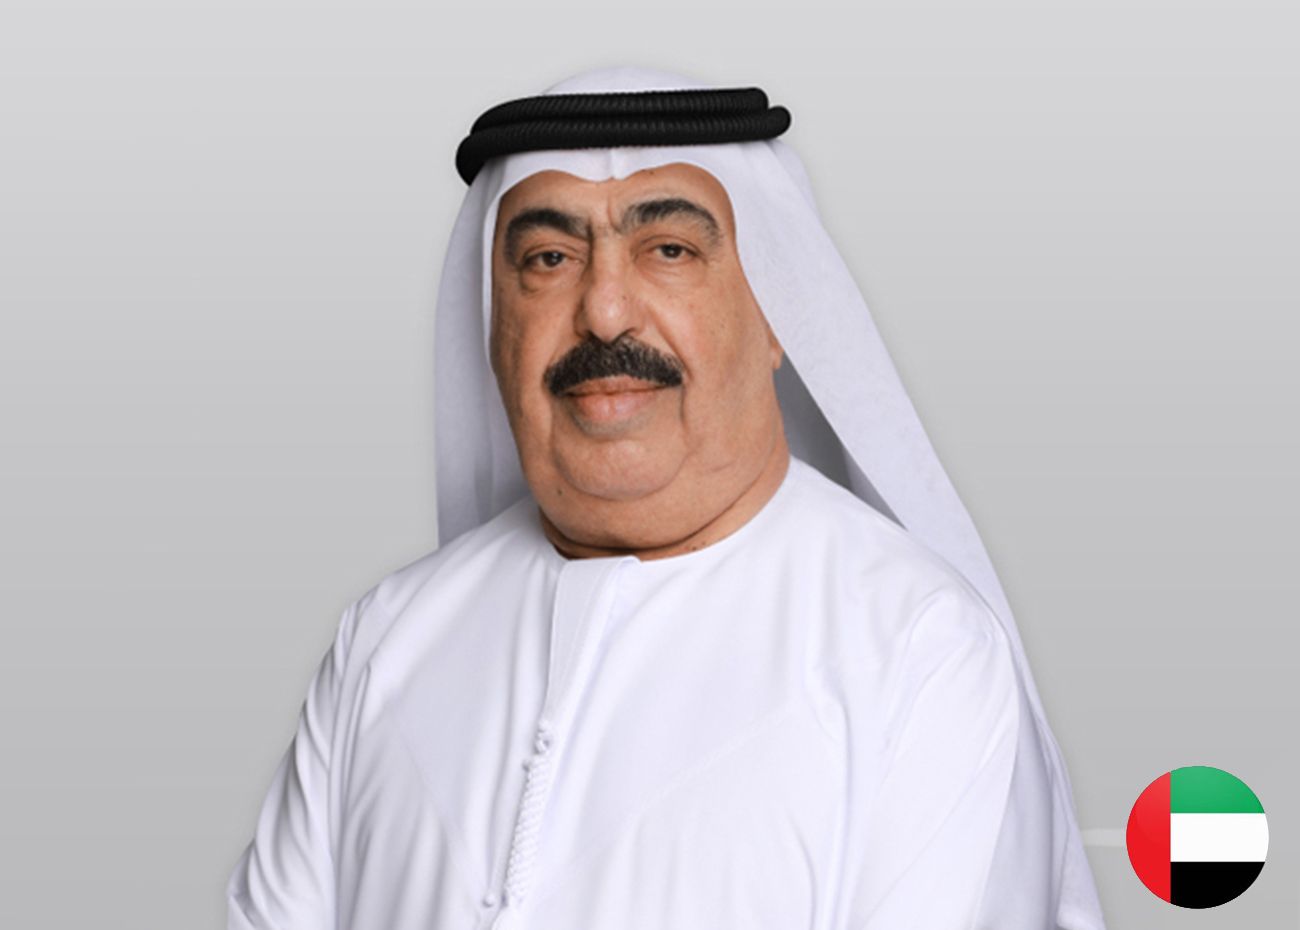 H.E Mohammed A. Ahli